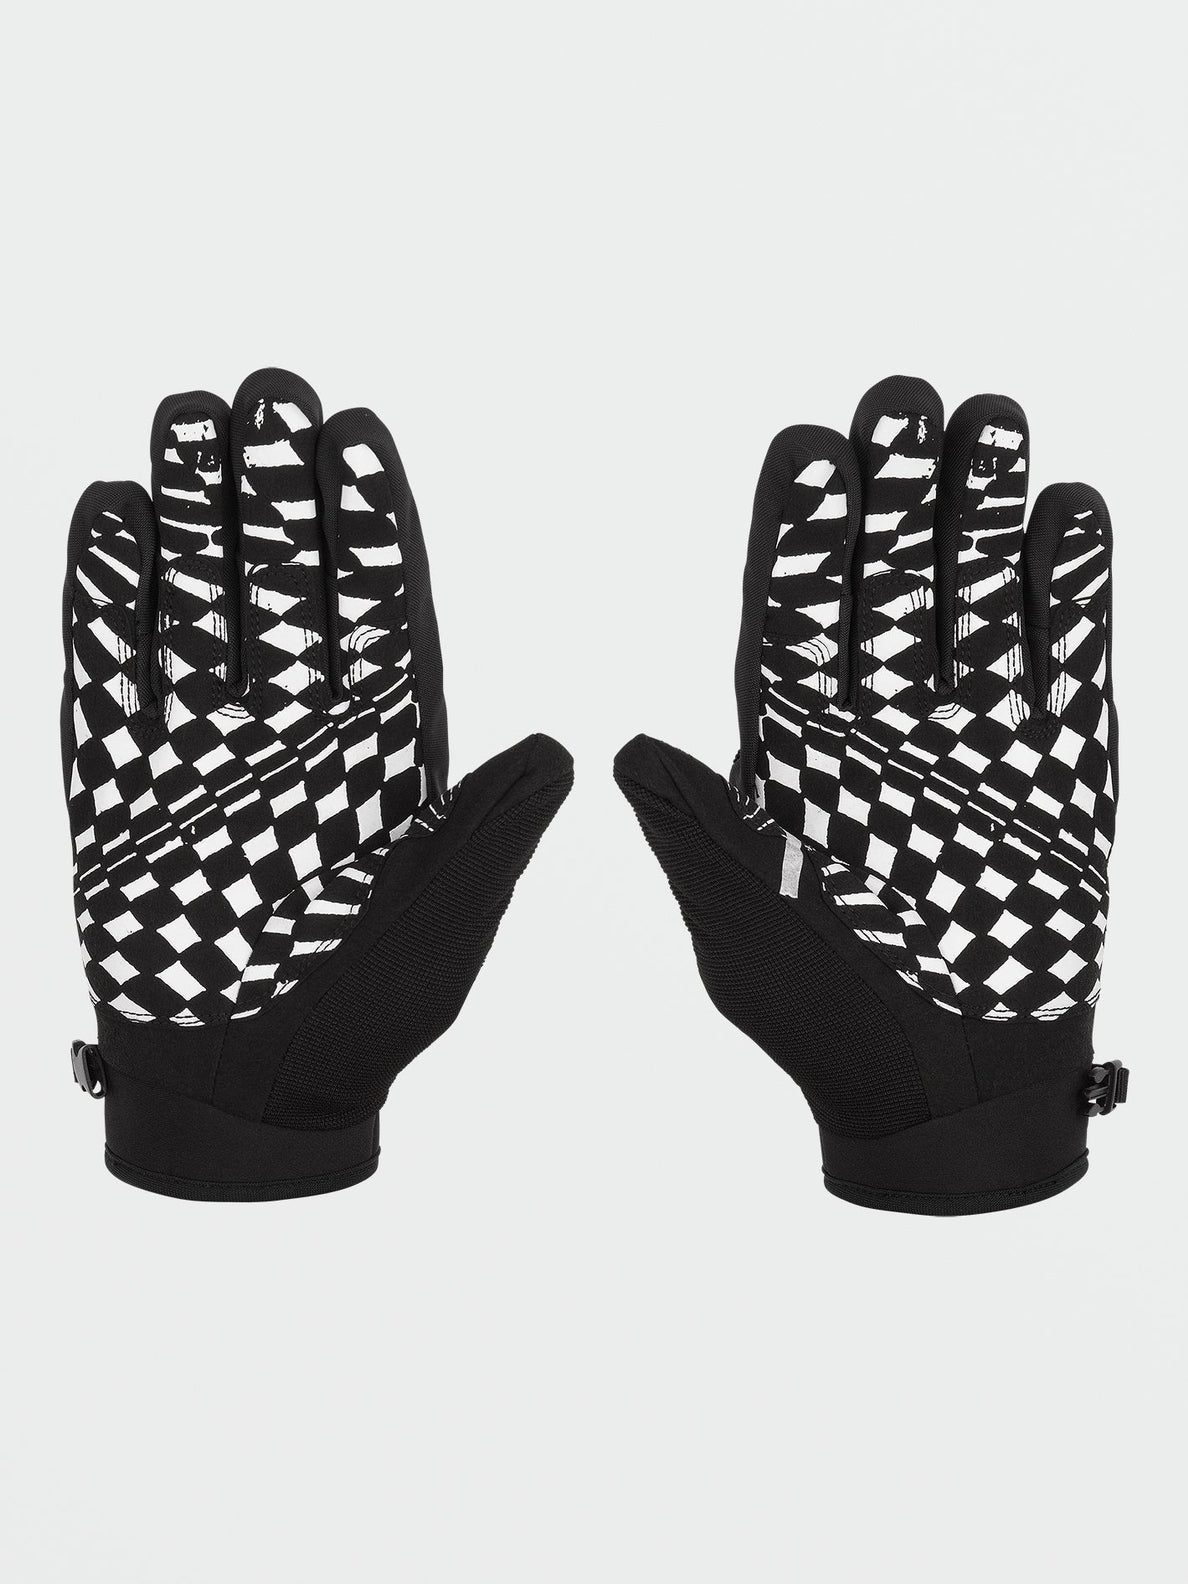 Guantes snowboard Crail Glove - Black